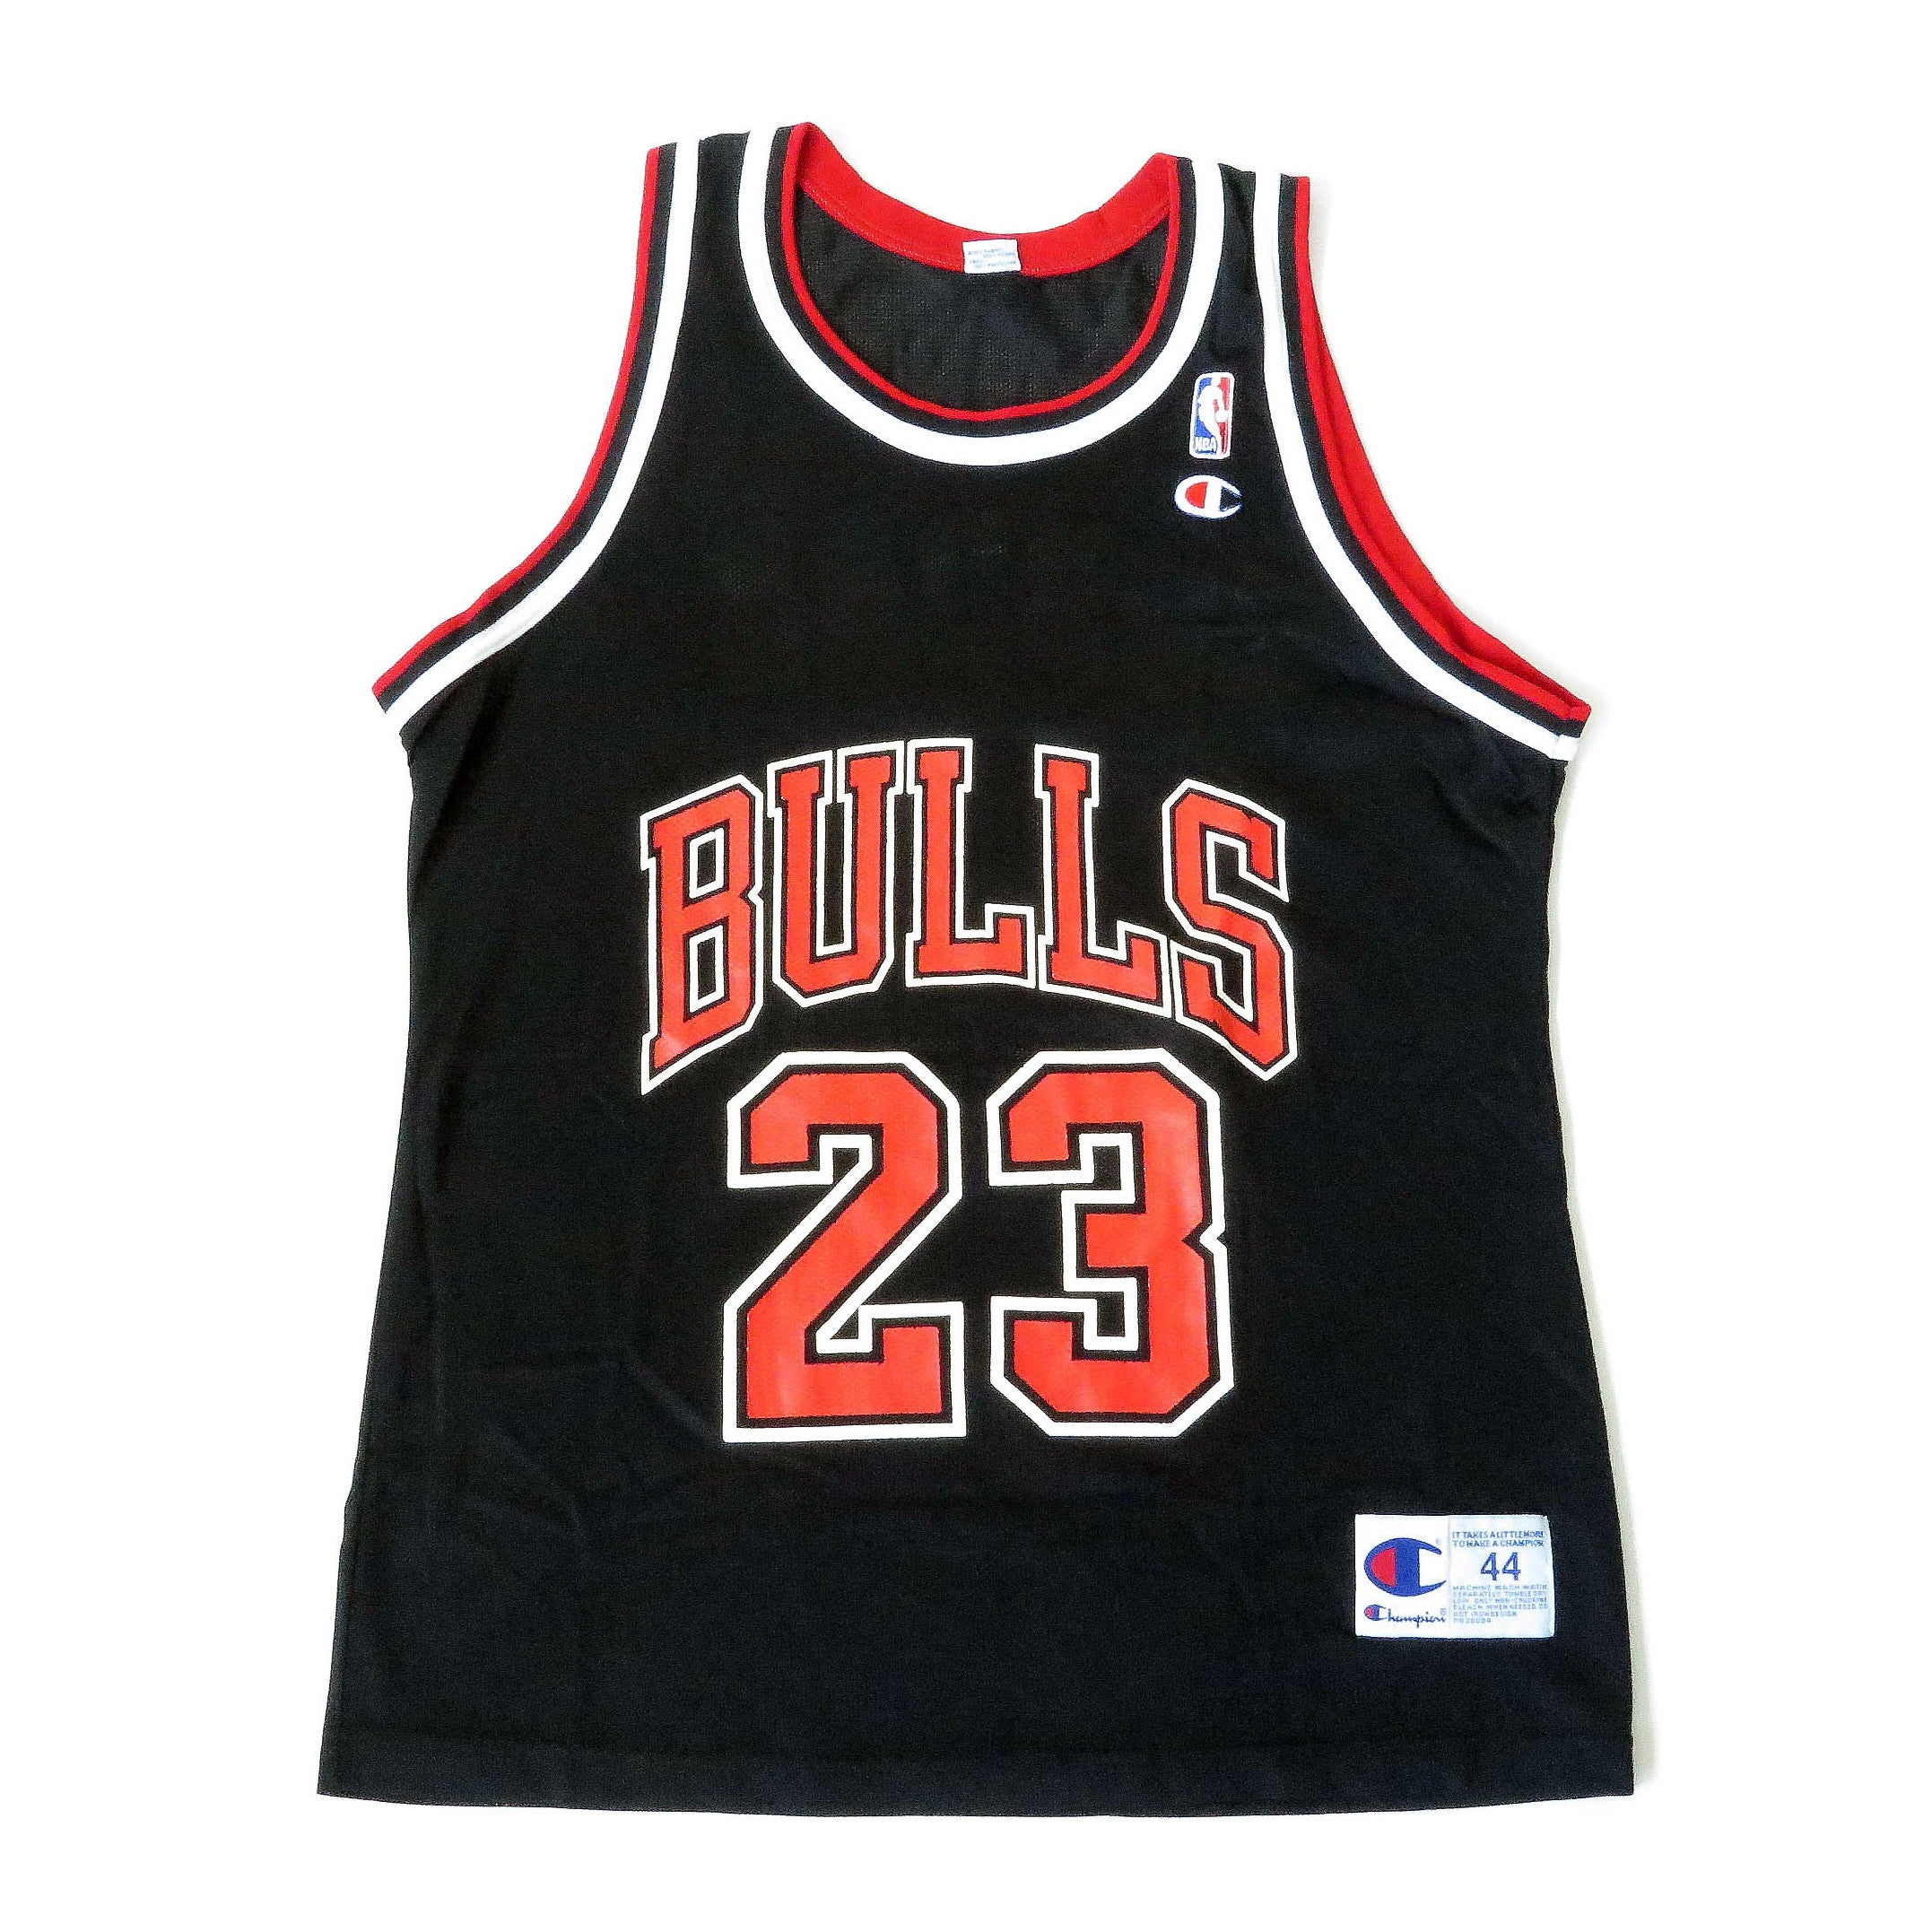 Vintage Michael Jordan Chicago Bulls Champion Jersey Sz 44